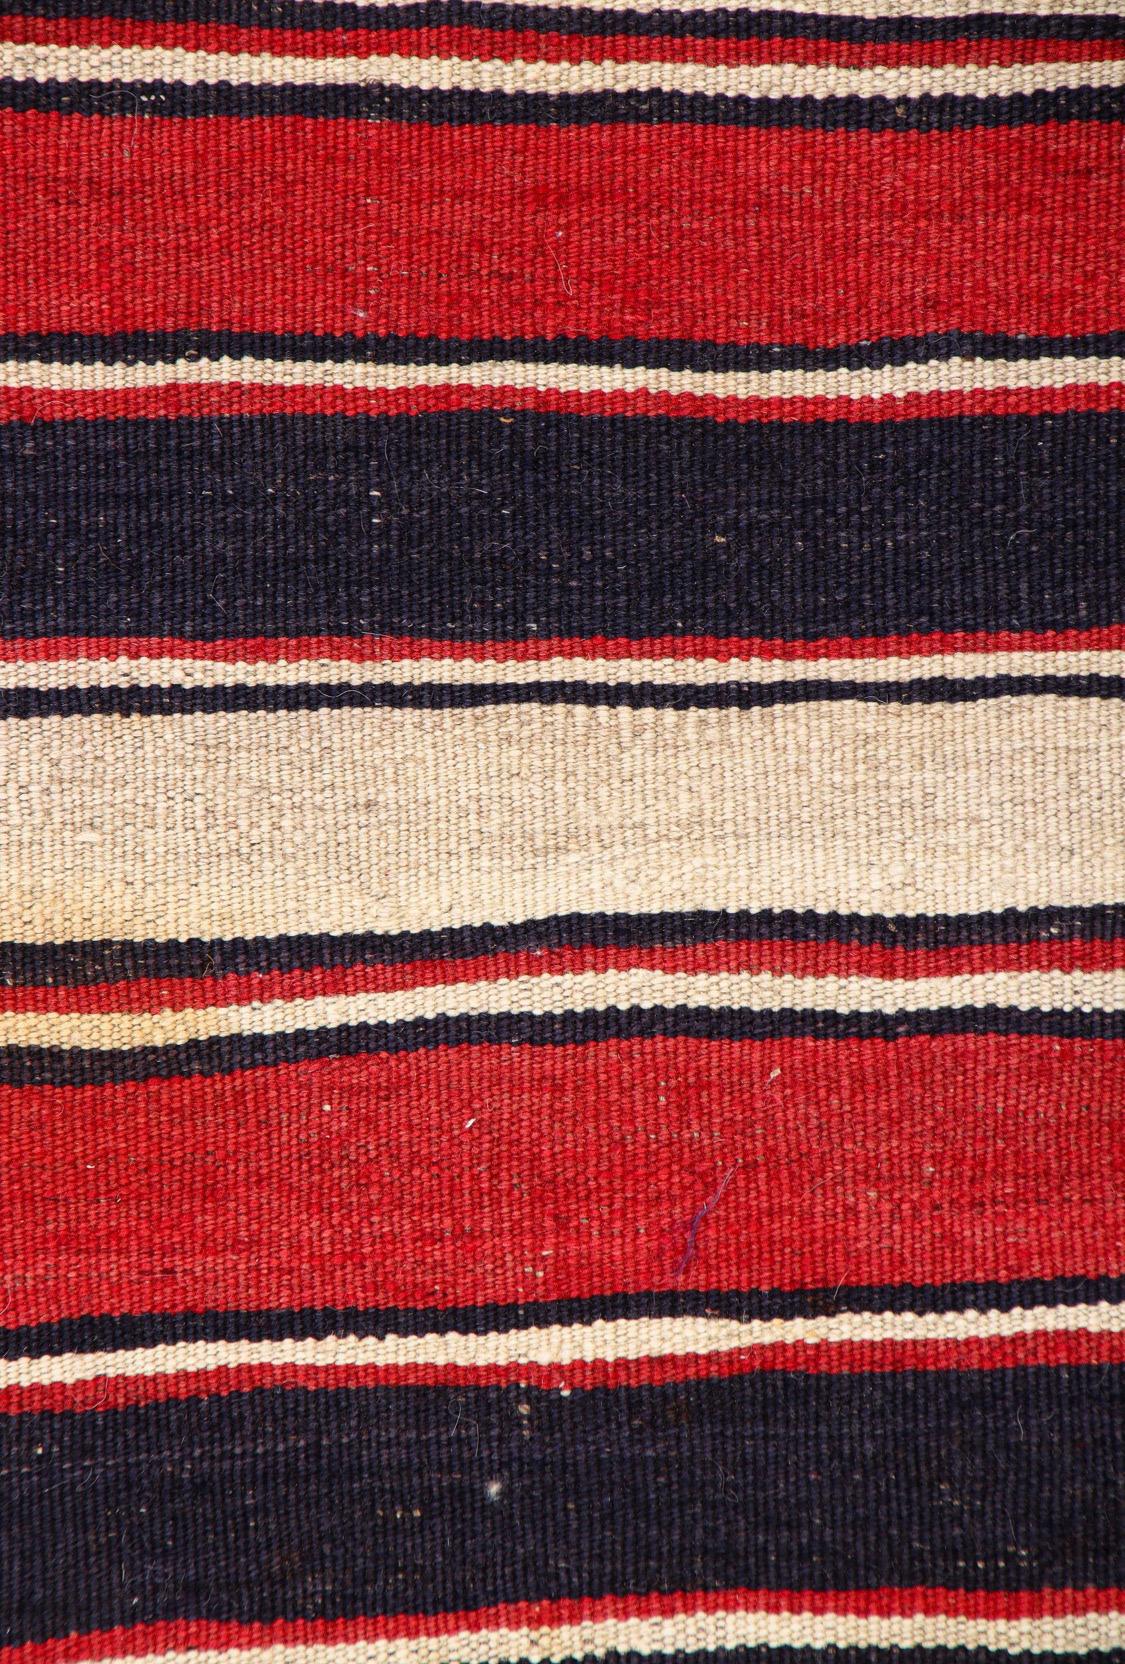 Hand-Woven Vintage Striped Flatweave Persian Mazandaran Kilim